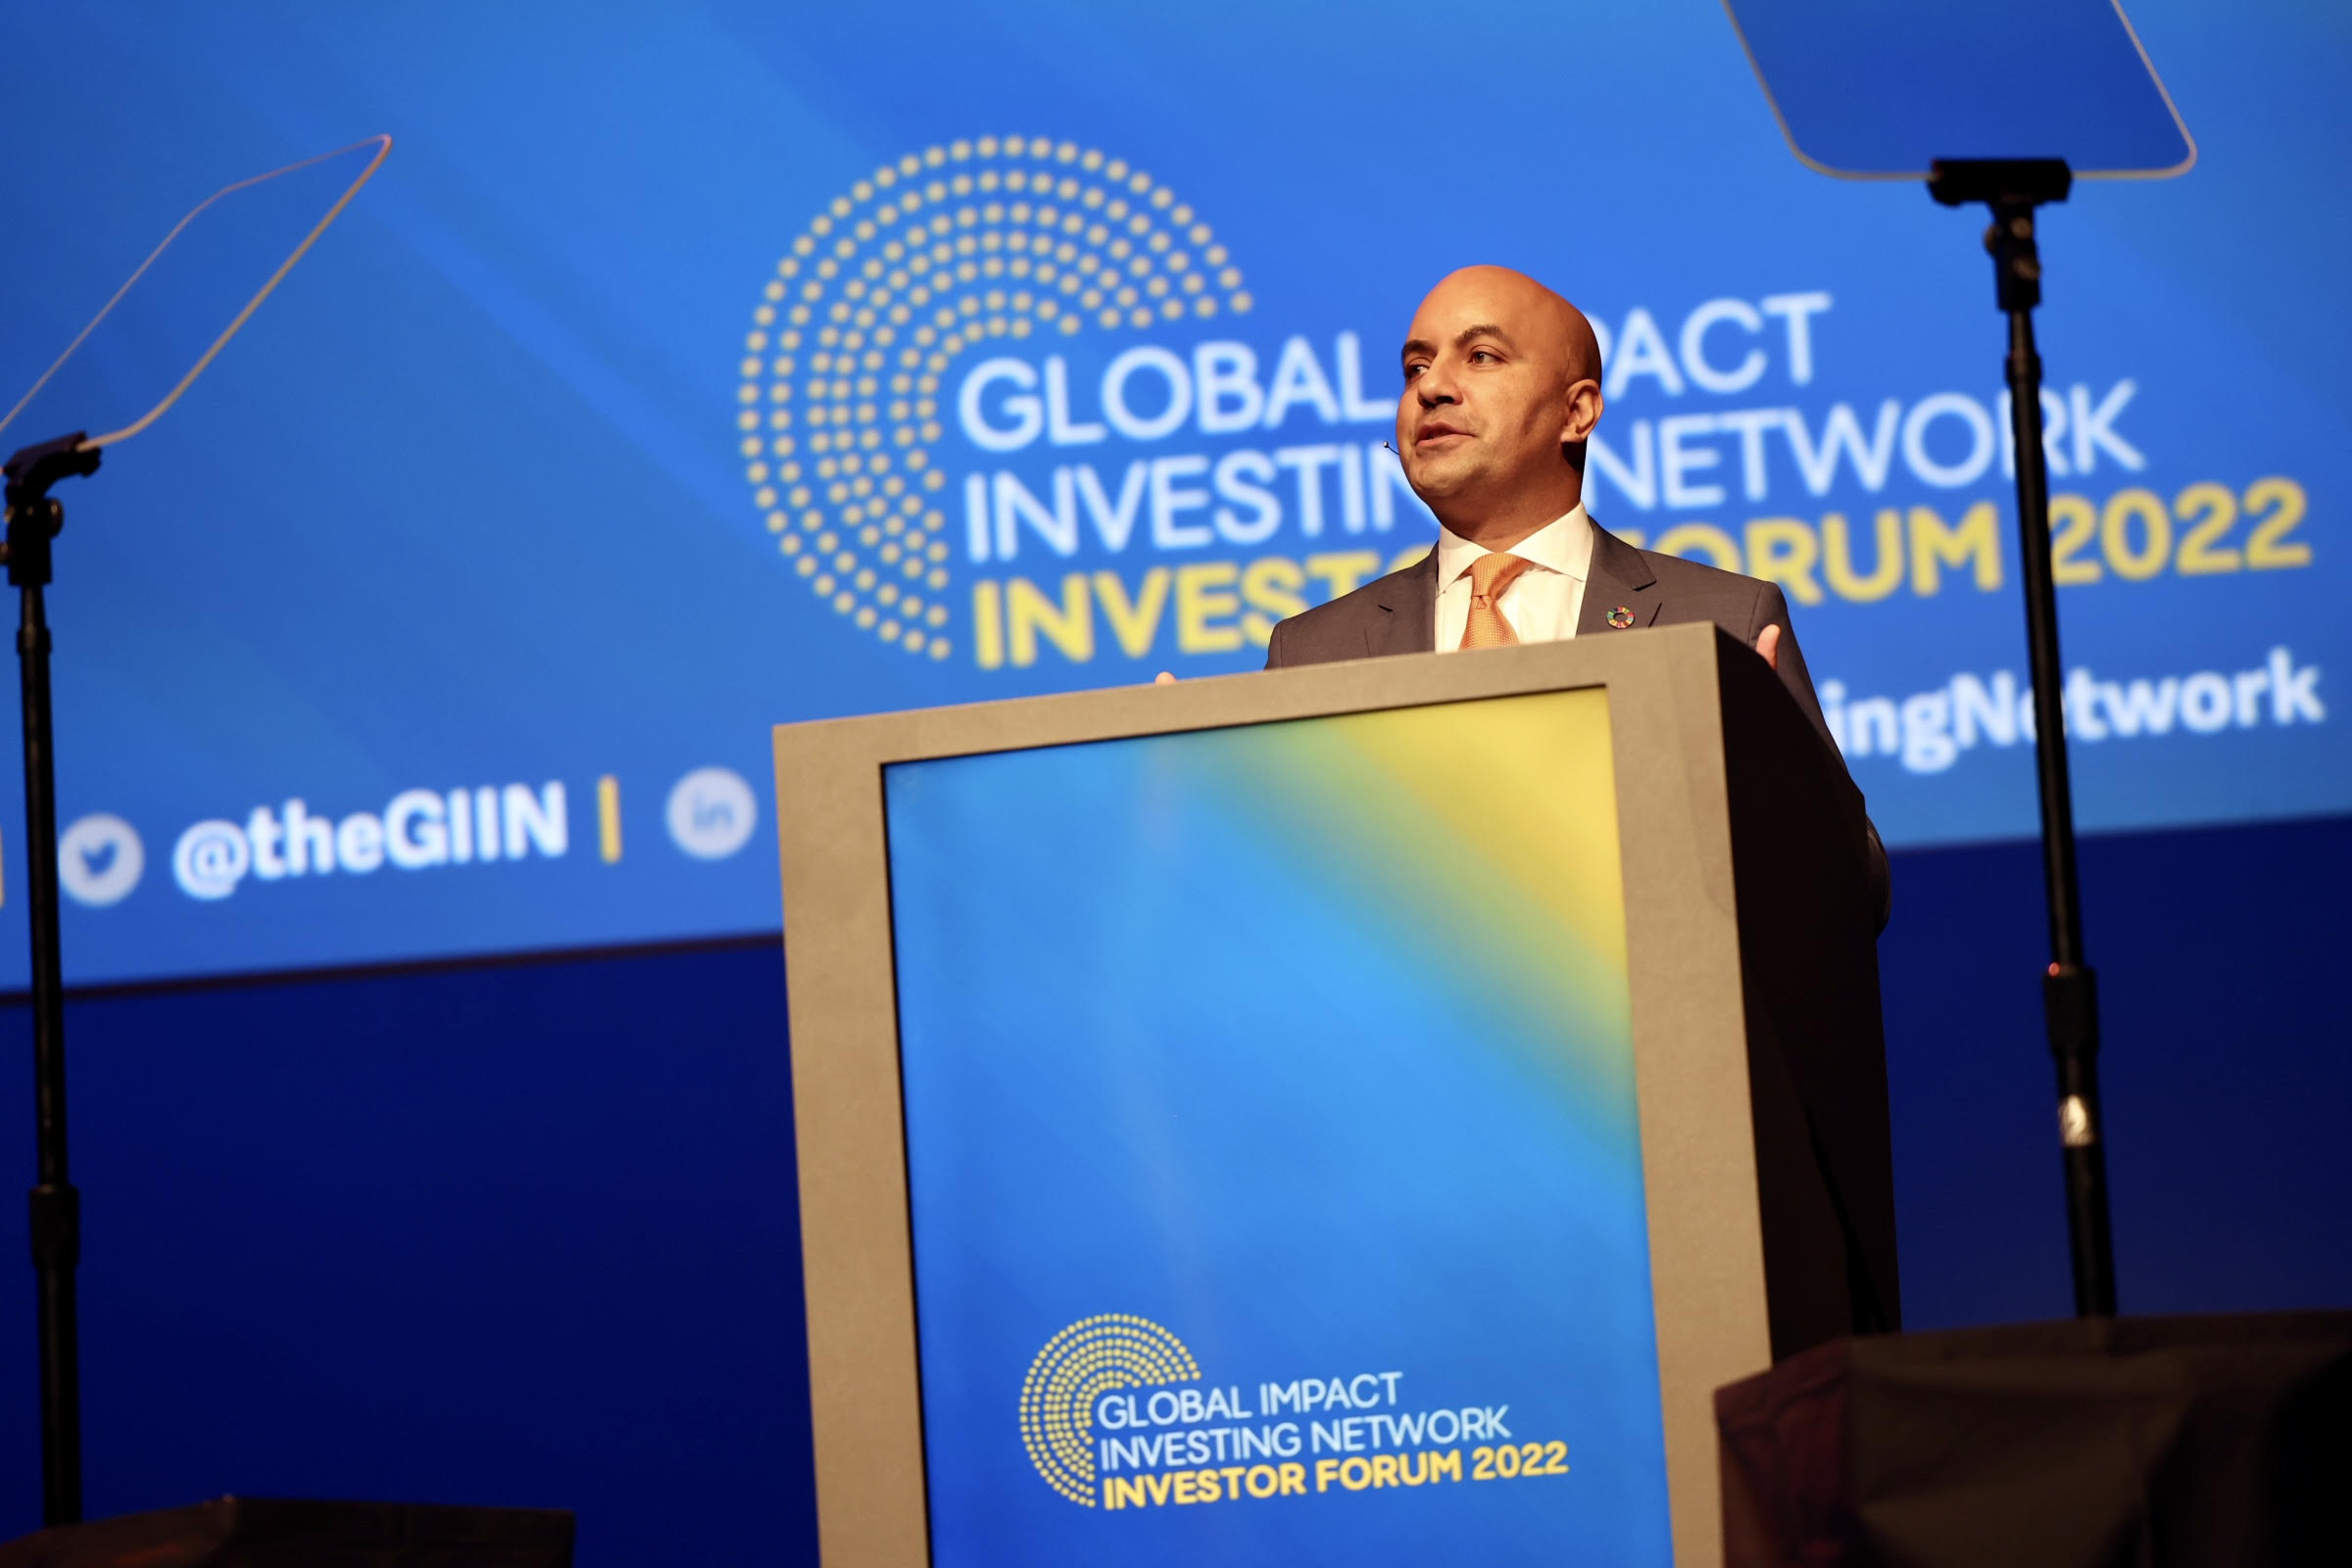 Amit Bouri at the GIIN investor forum 2022